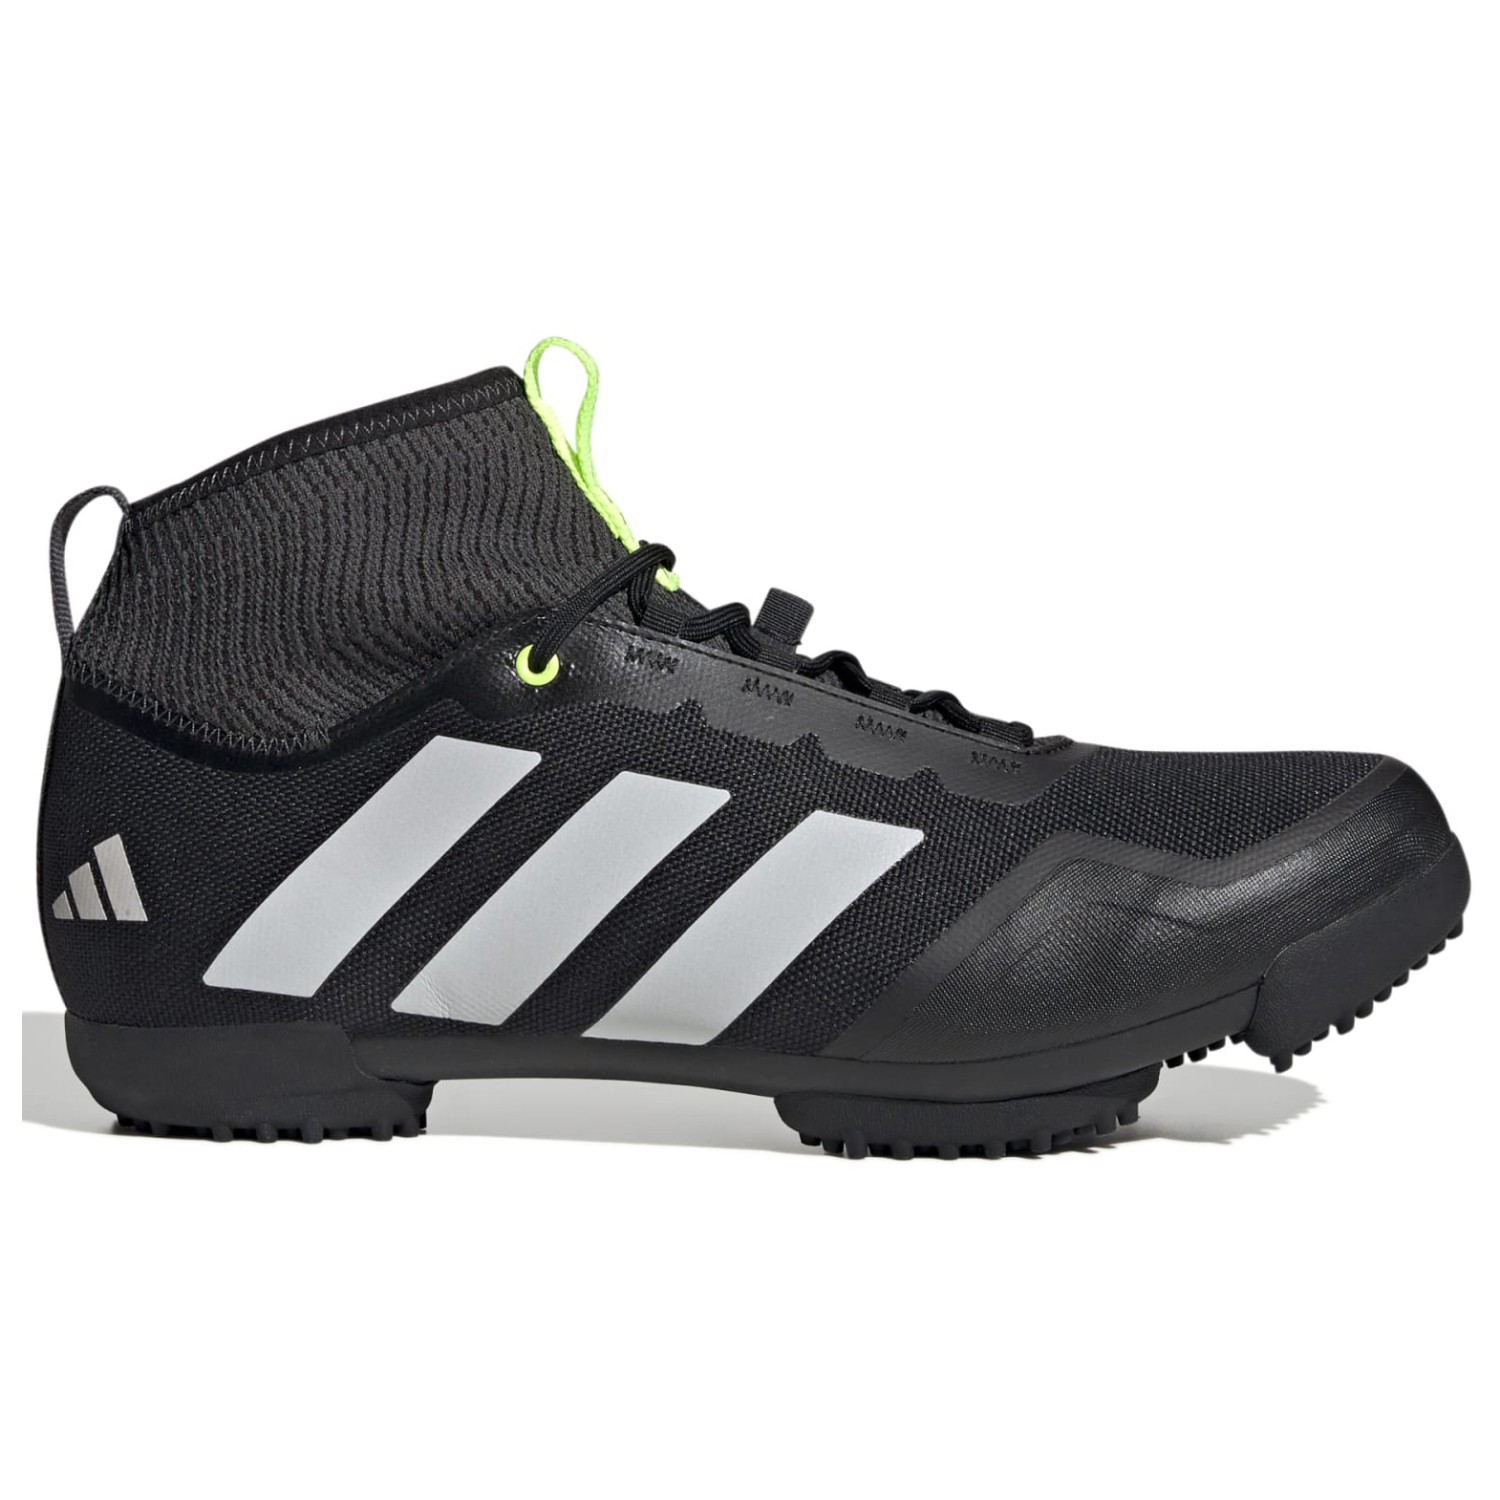 Велосипедная обувь Adidas The Gravel Shoe 2 0, цвет Core Black/FTW White/Lucid Lemon кроссовки water shoe hunter цвет black marble black